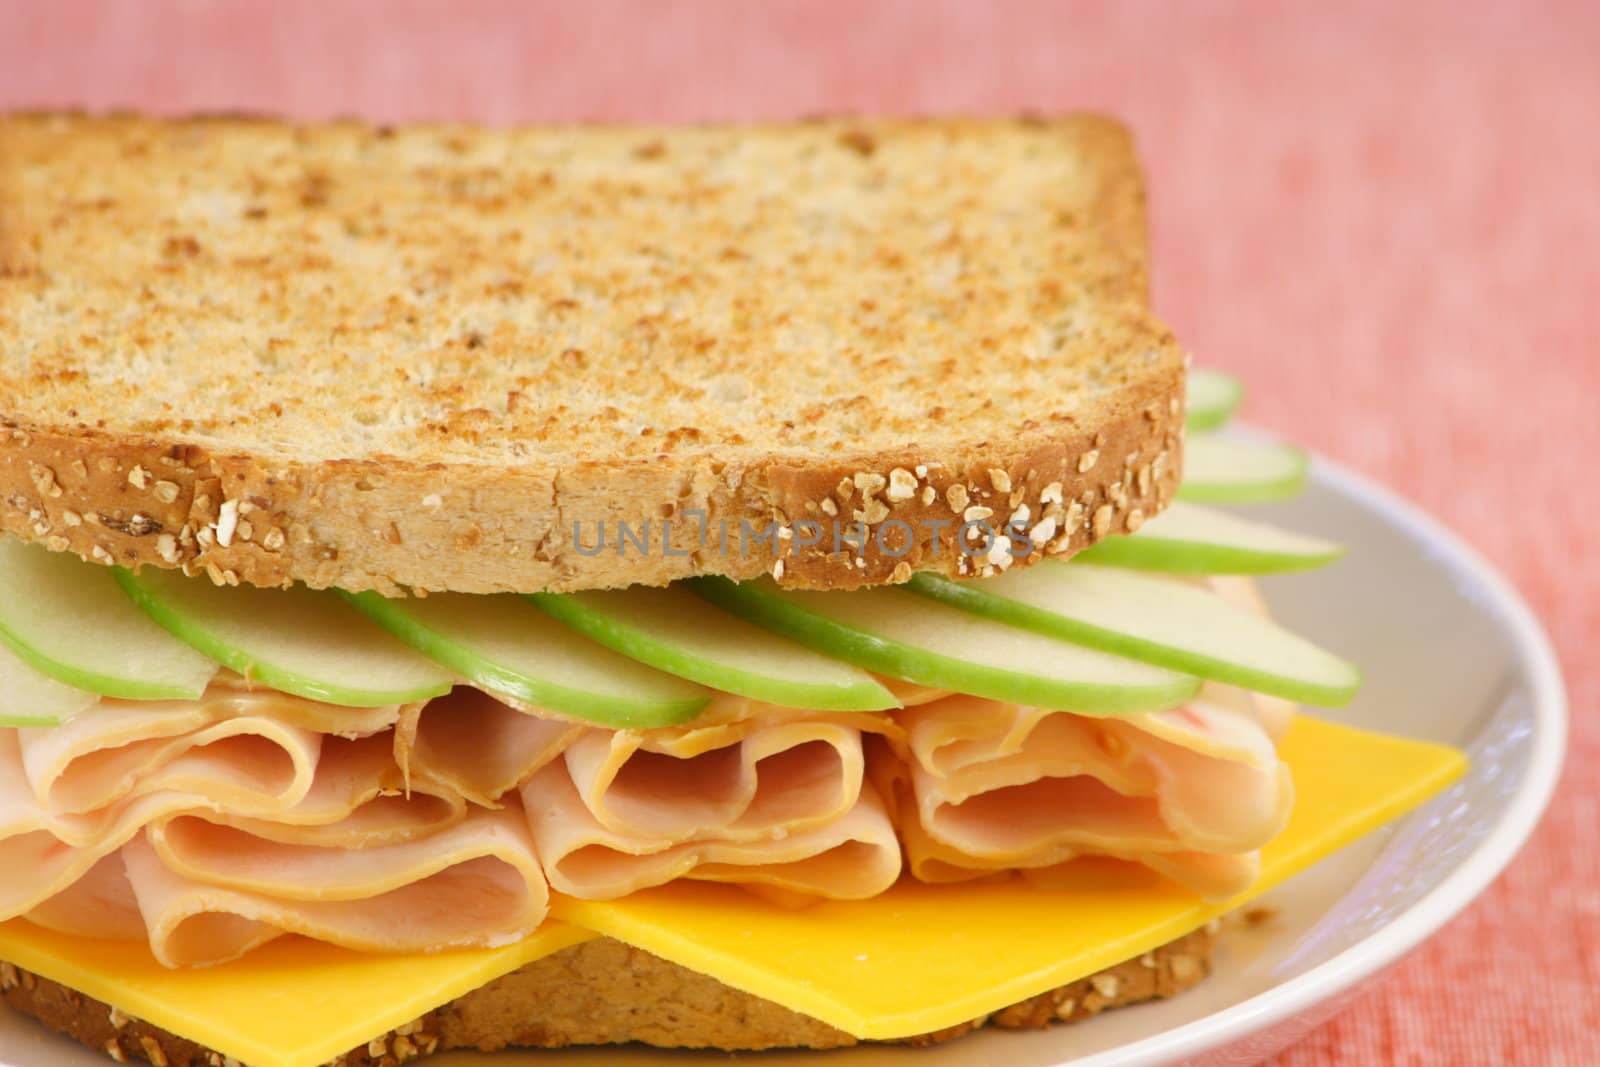 picnic sandwich by tacar